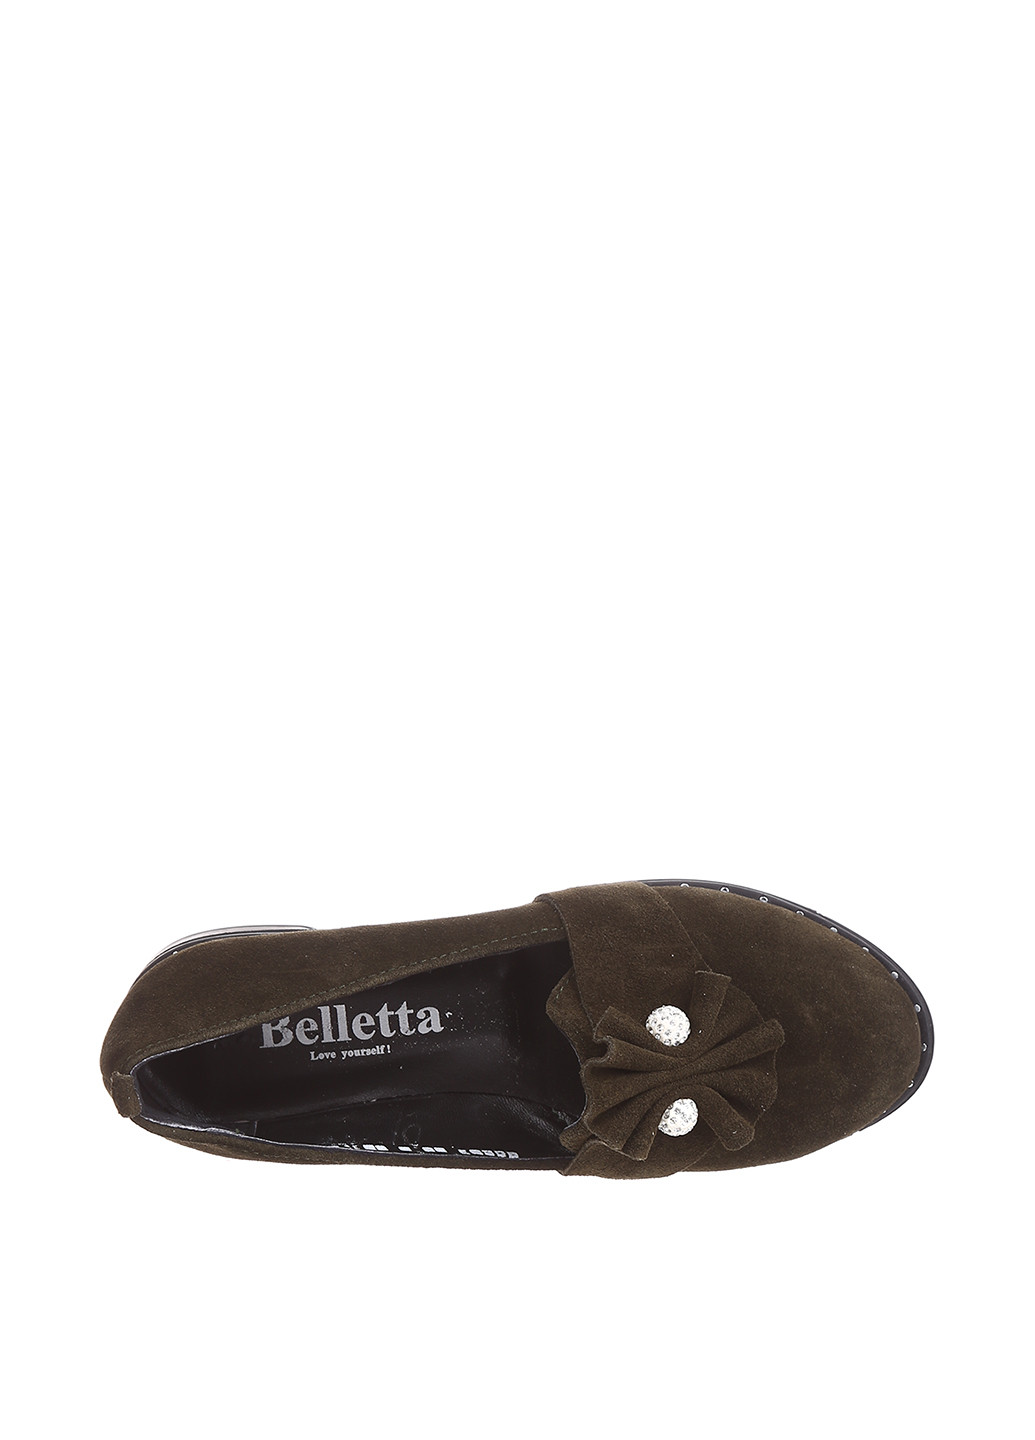 Туфли Belletta на низком каблуке с бусинами